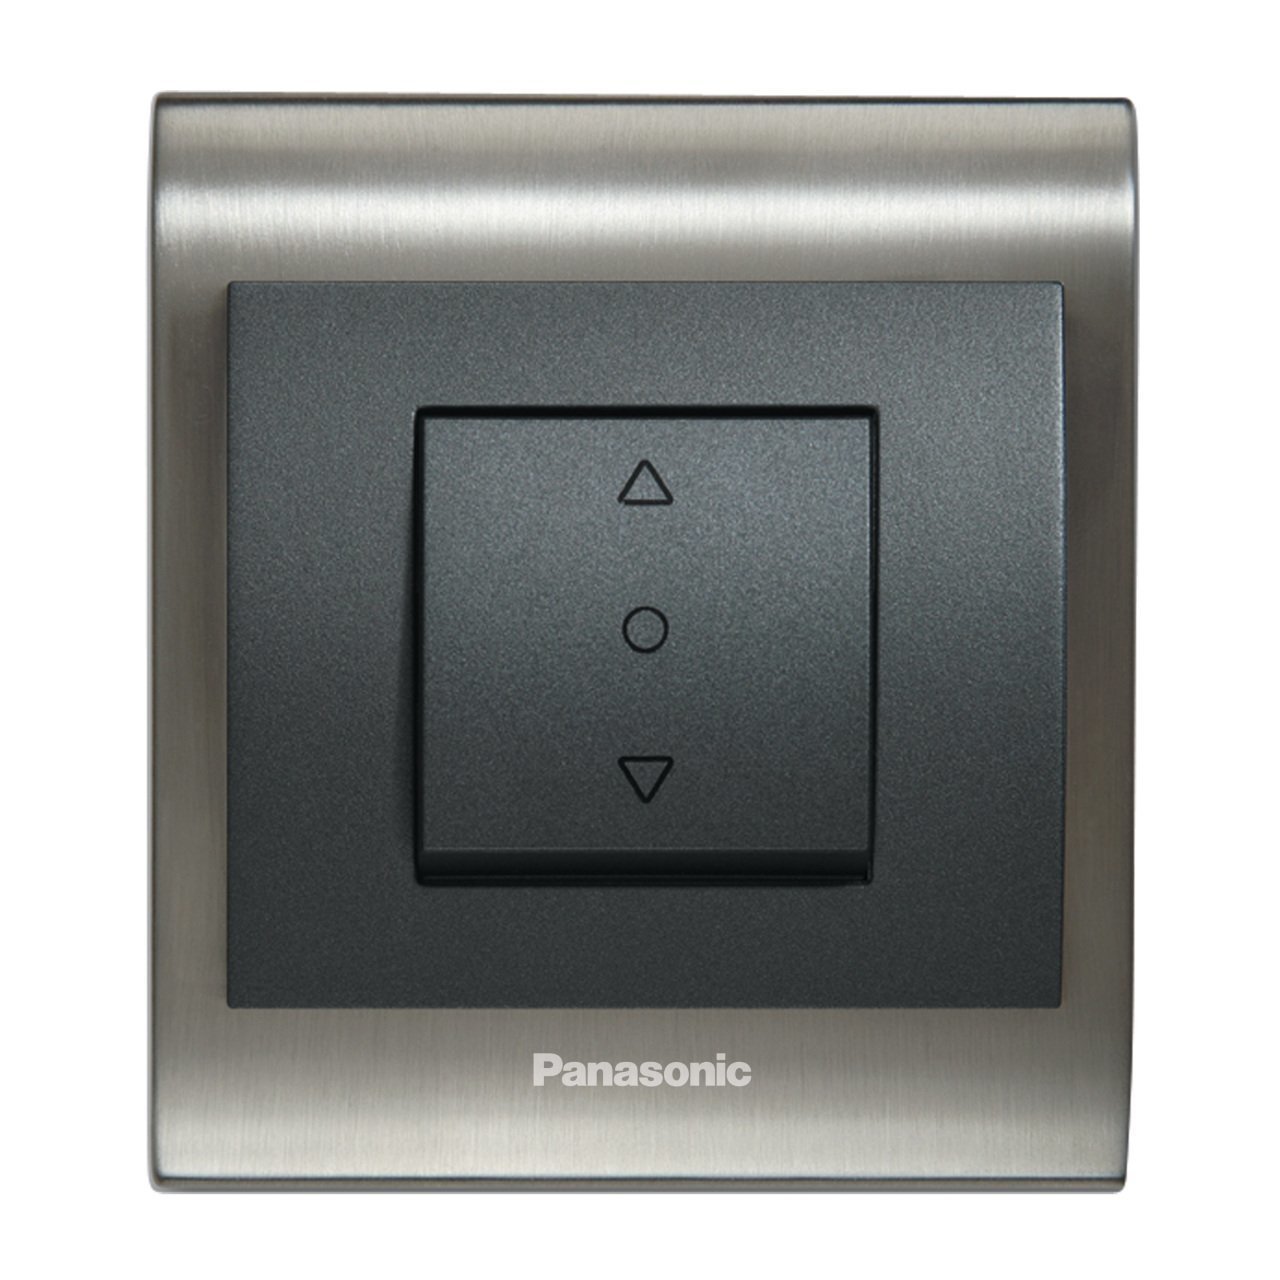 Viko Panasonic Thea Blu Inox Füme Tek Düğmeli Jaluzi